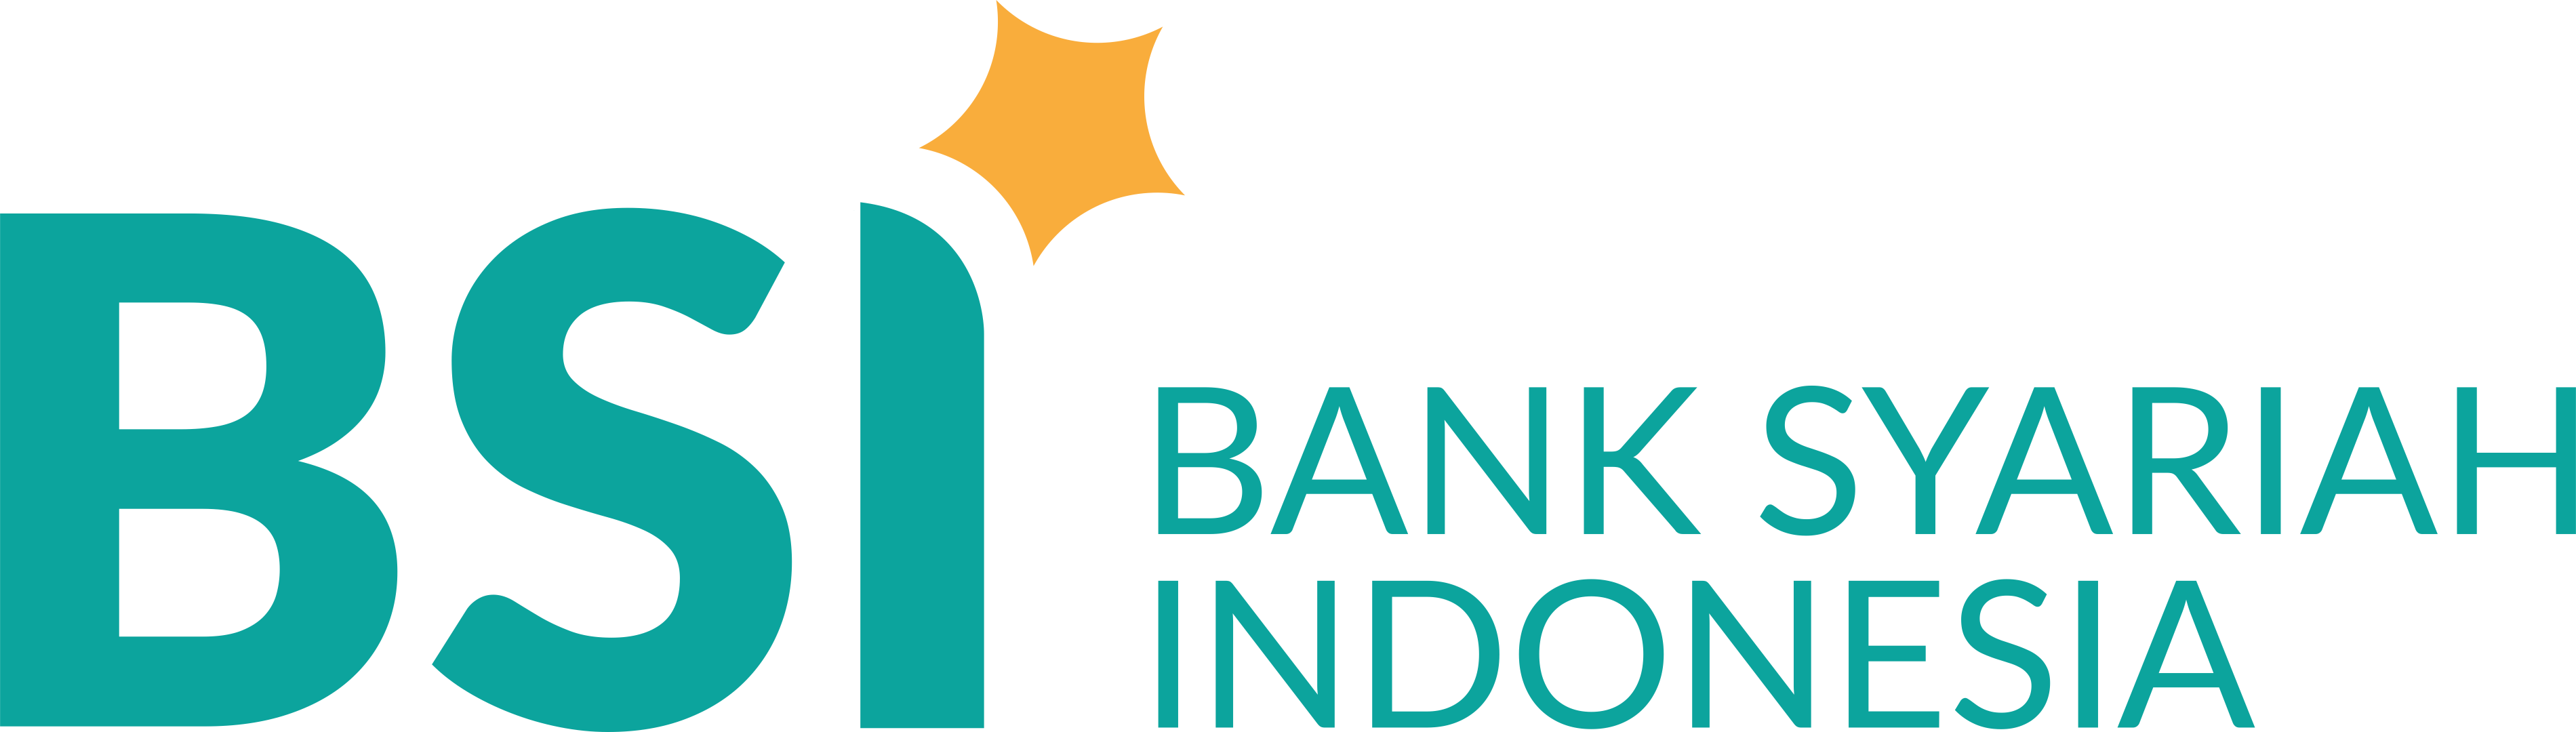 BSI (Bank Syariah Indonesia) Logo (PNG1080p) - Vector69Com